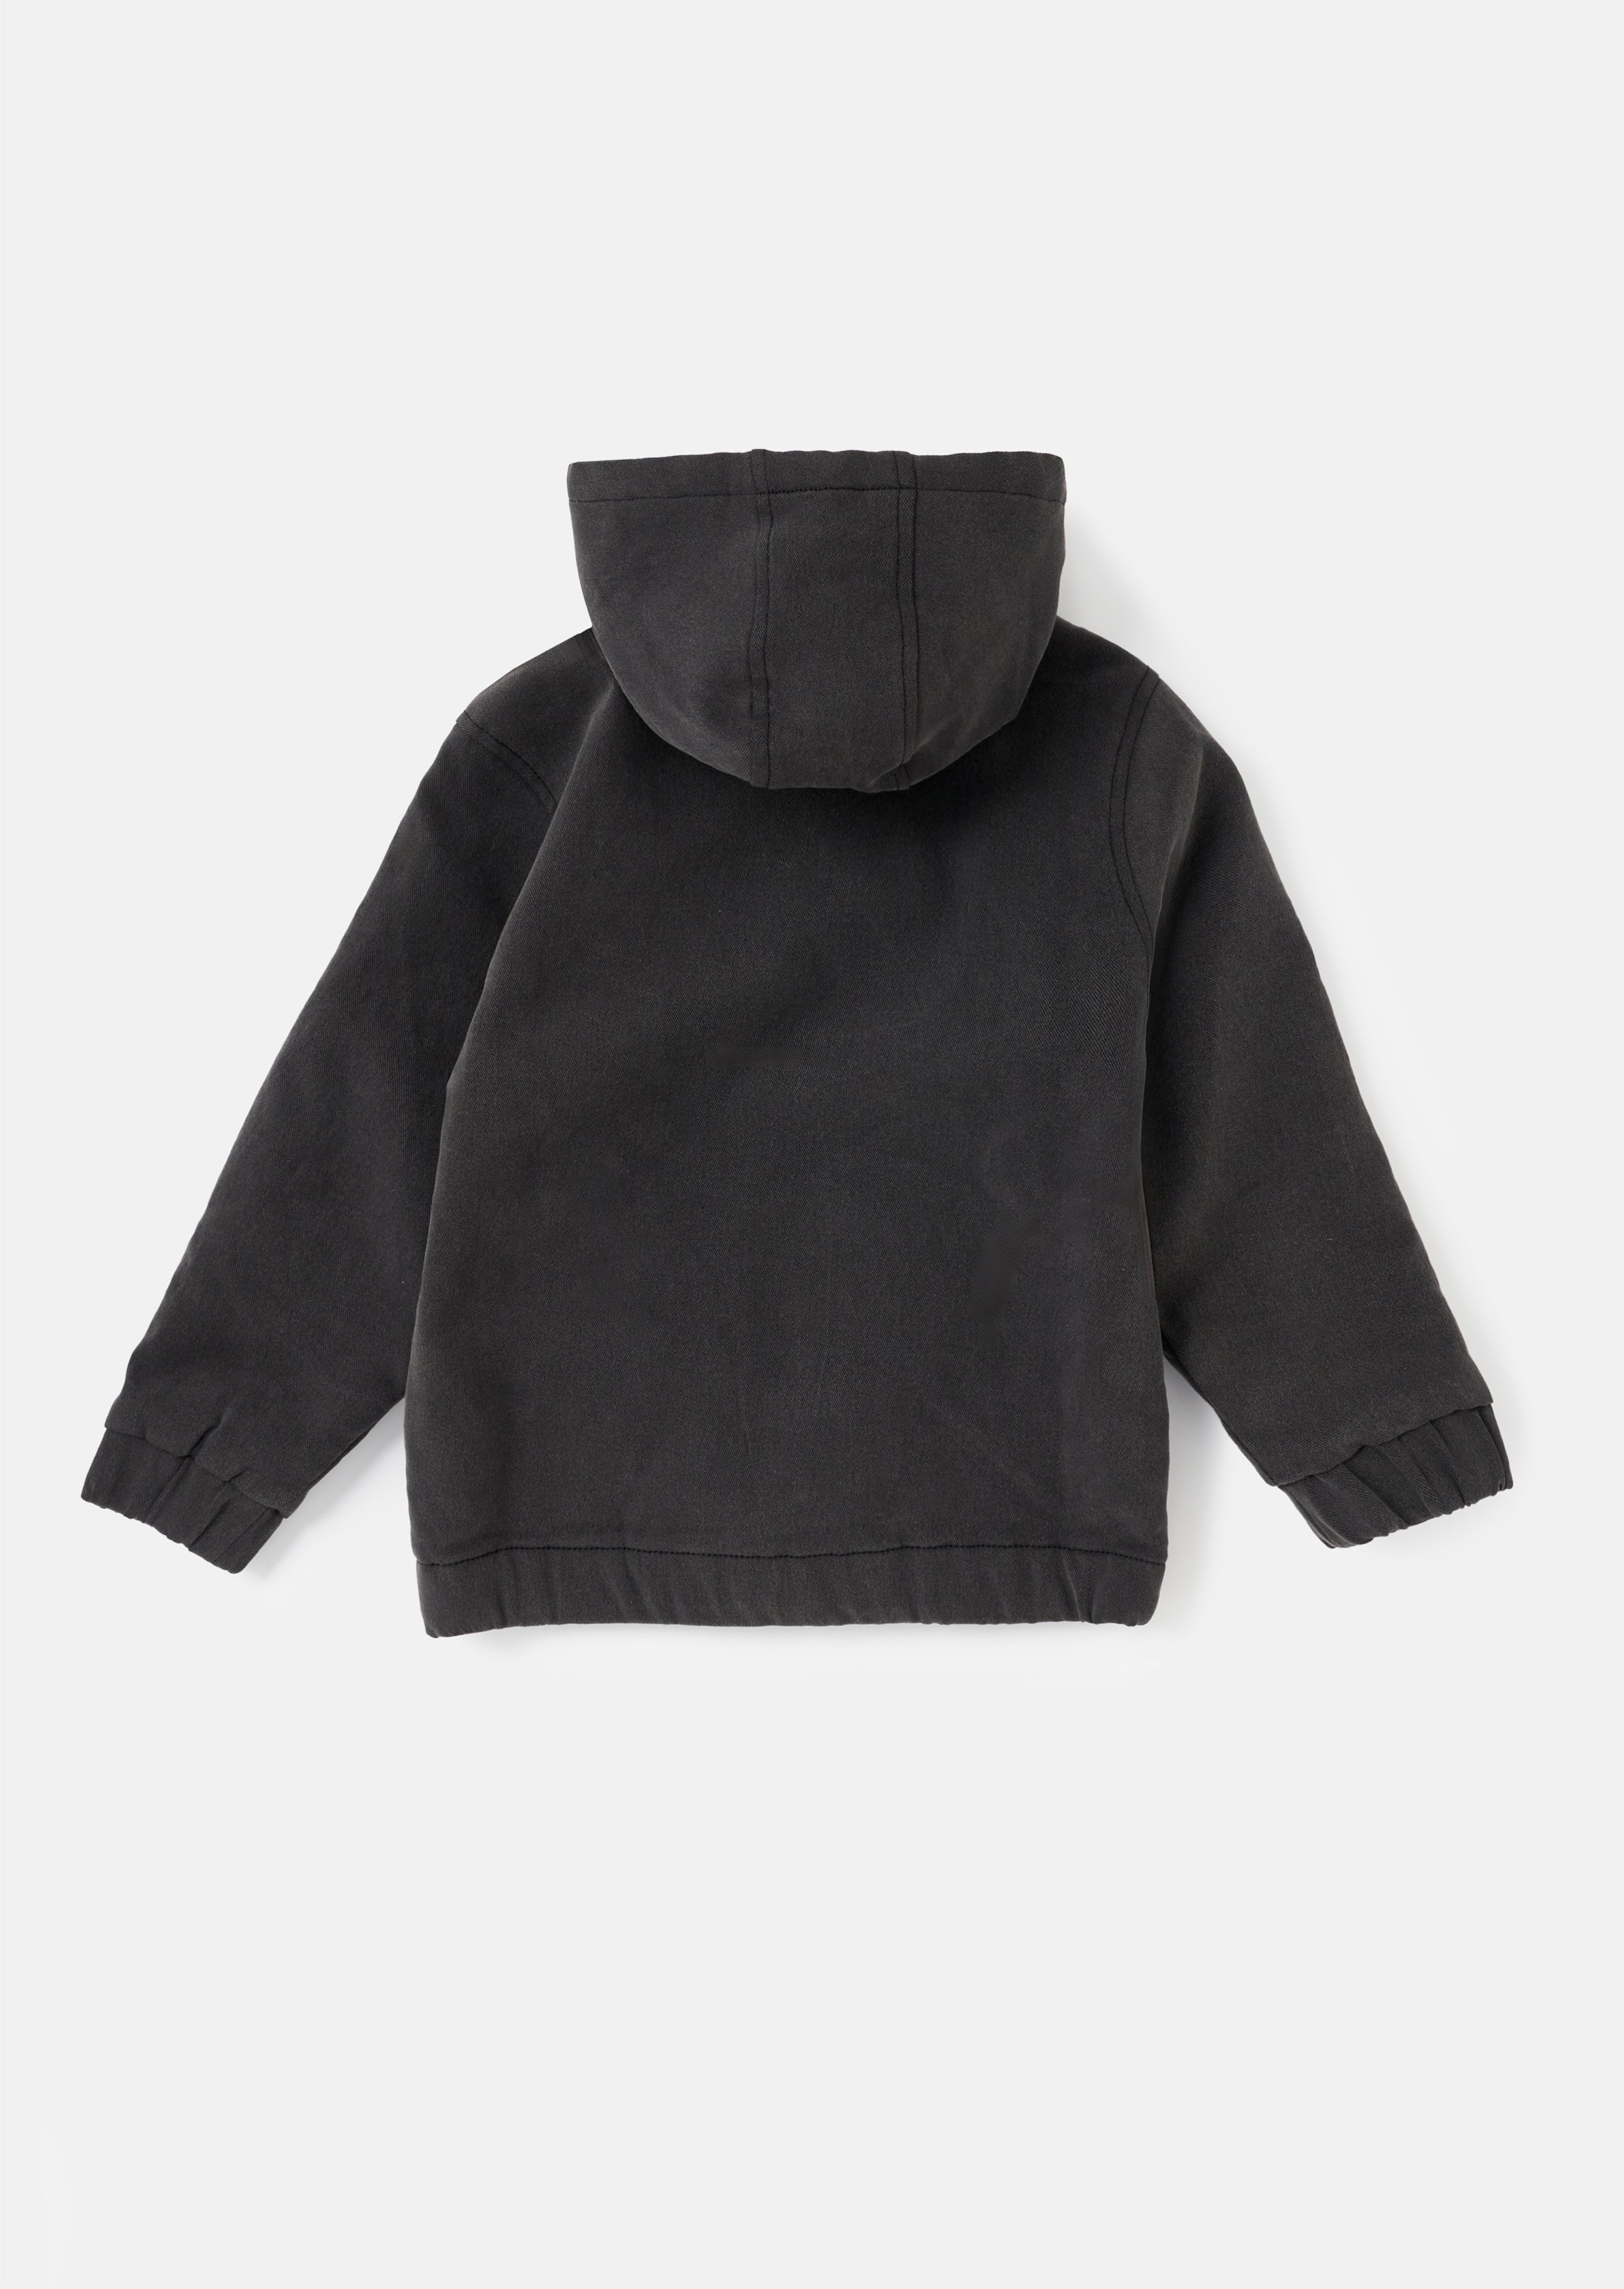 Some wardrobe essentials Mid Blue Denim jacket- Zara Grey Hoodie- HM Black  Jeans- Cotton On Tan/Camel Chelsea Boots- Cotton On Do you h... | Instagram